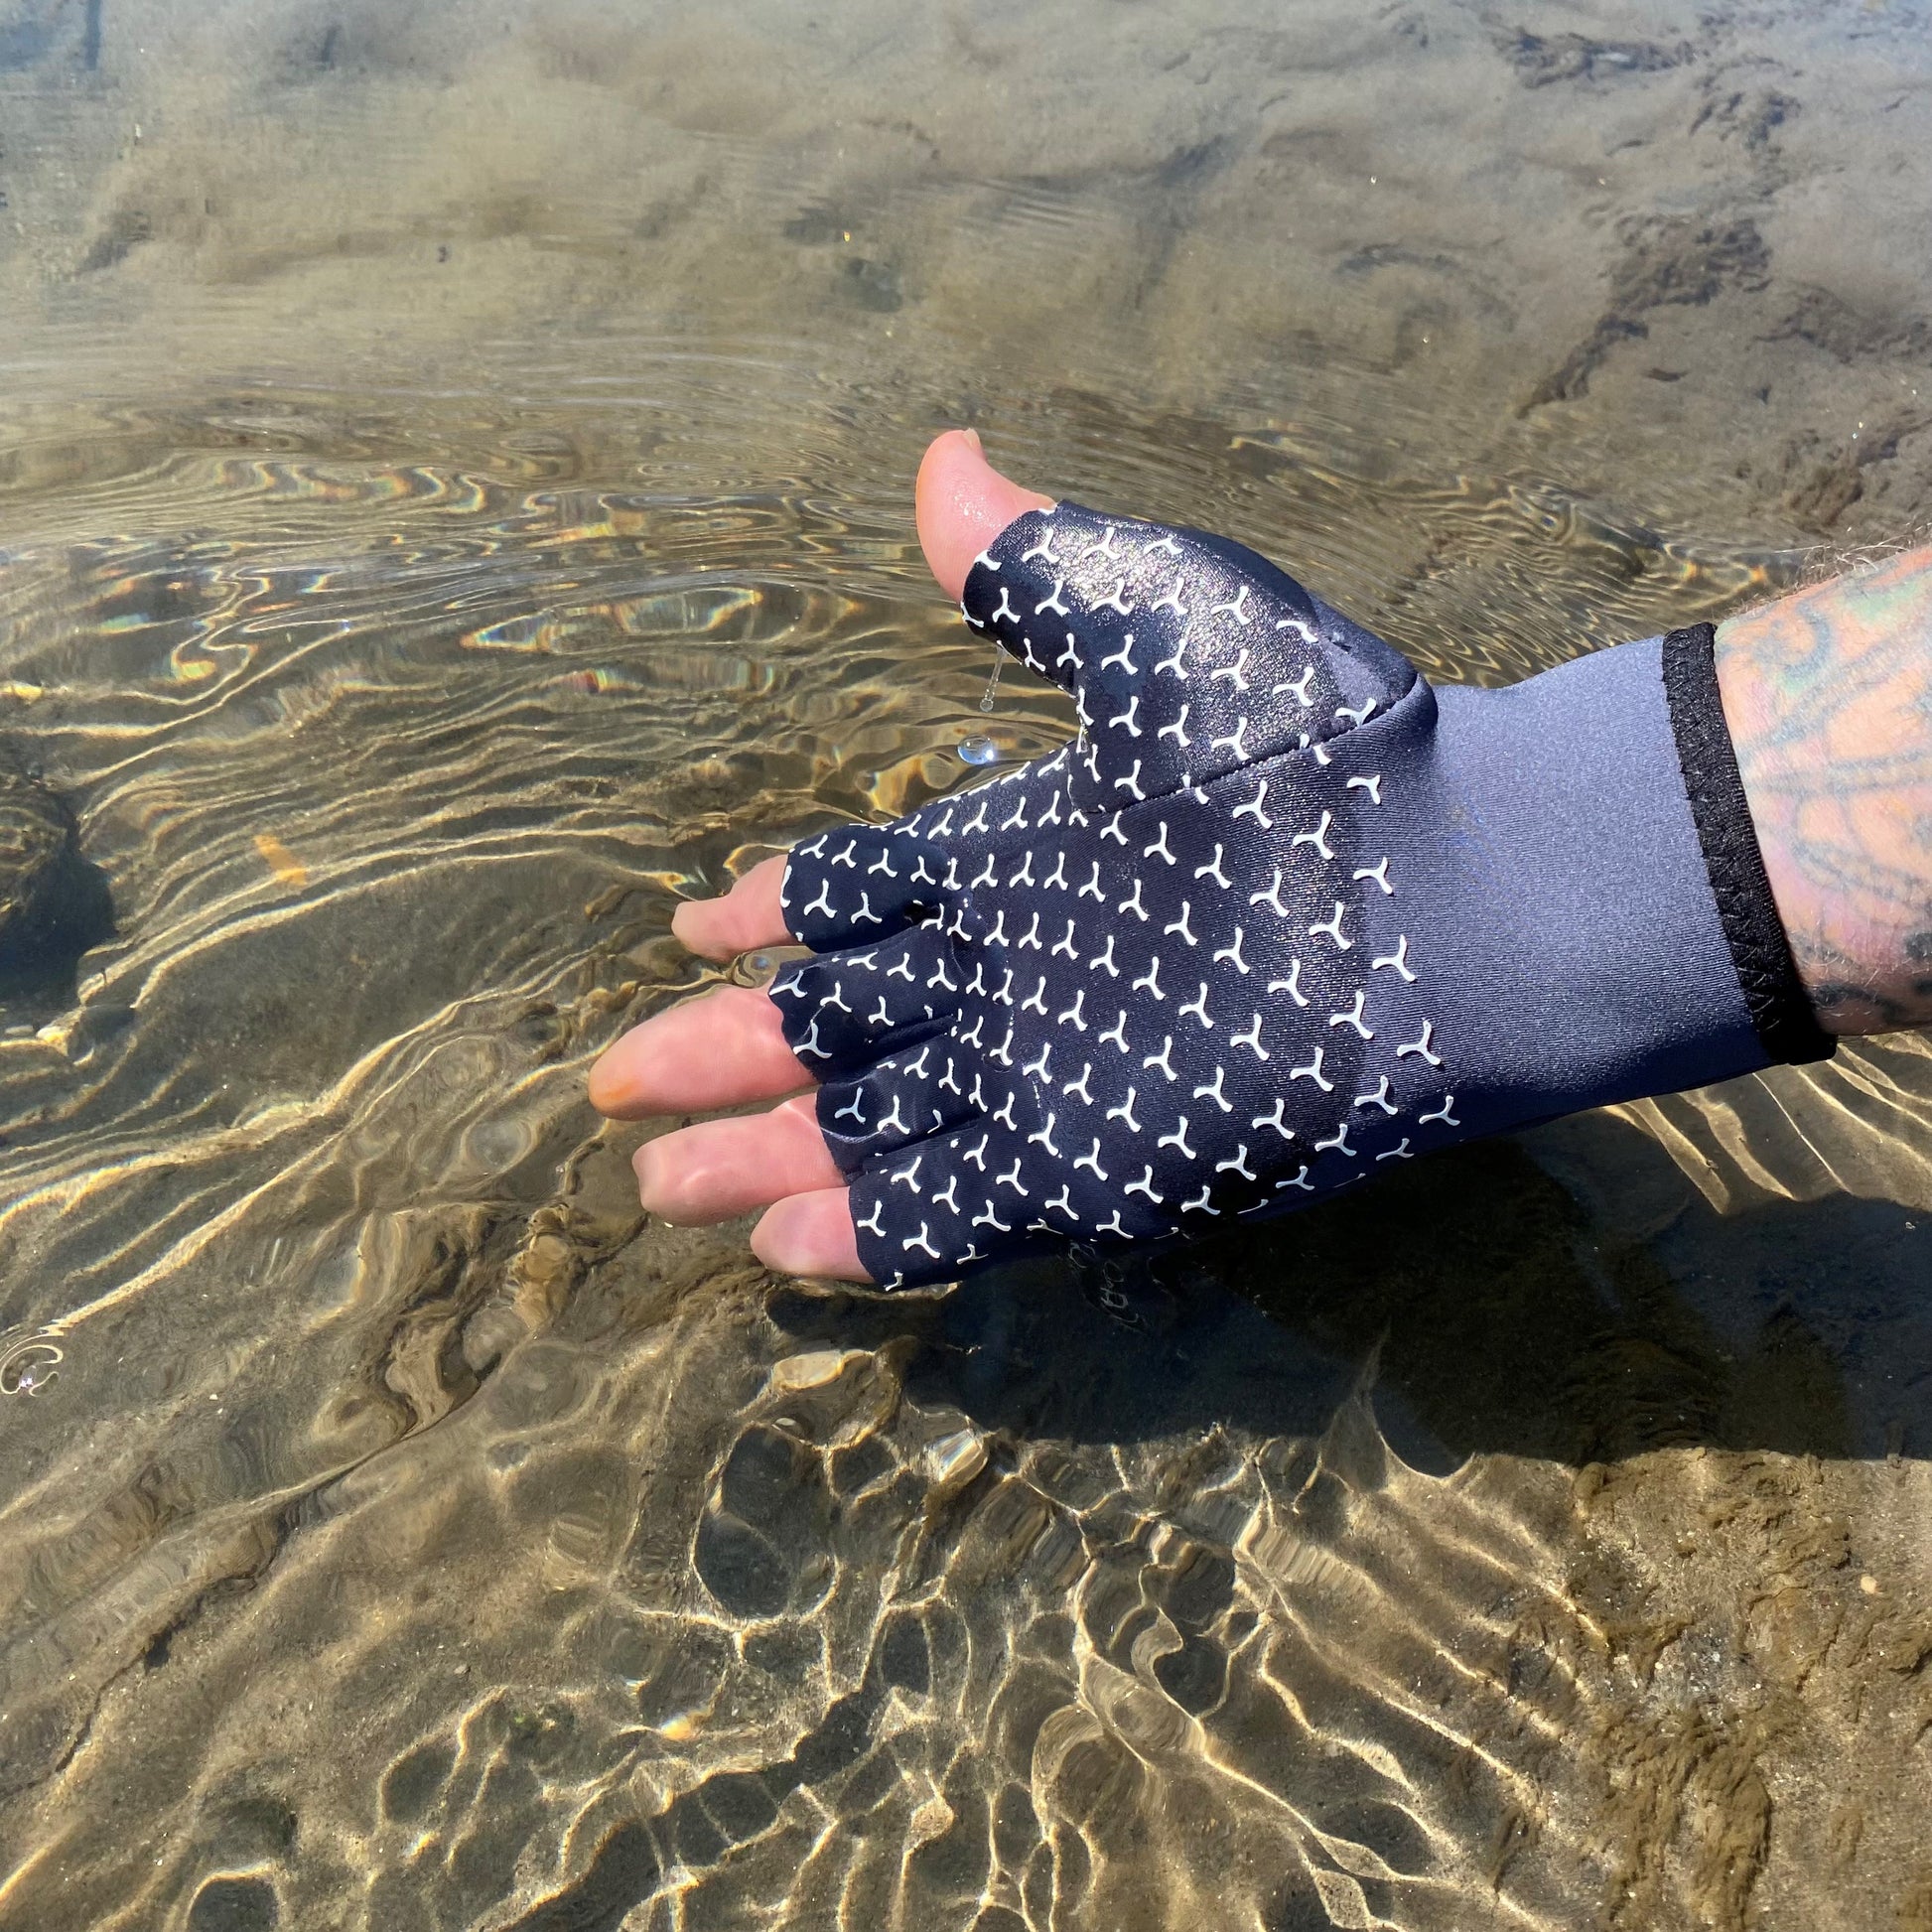 Glacier Glove Alaska River Series Windproof Fingerless Gloves